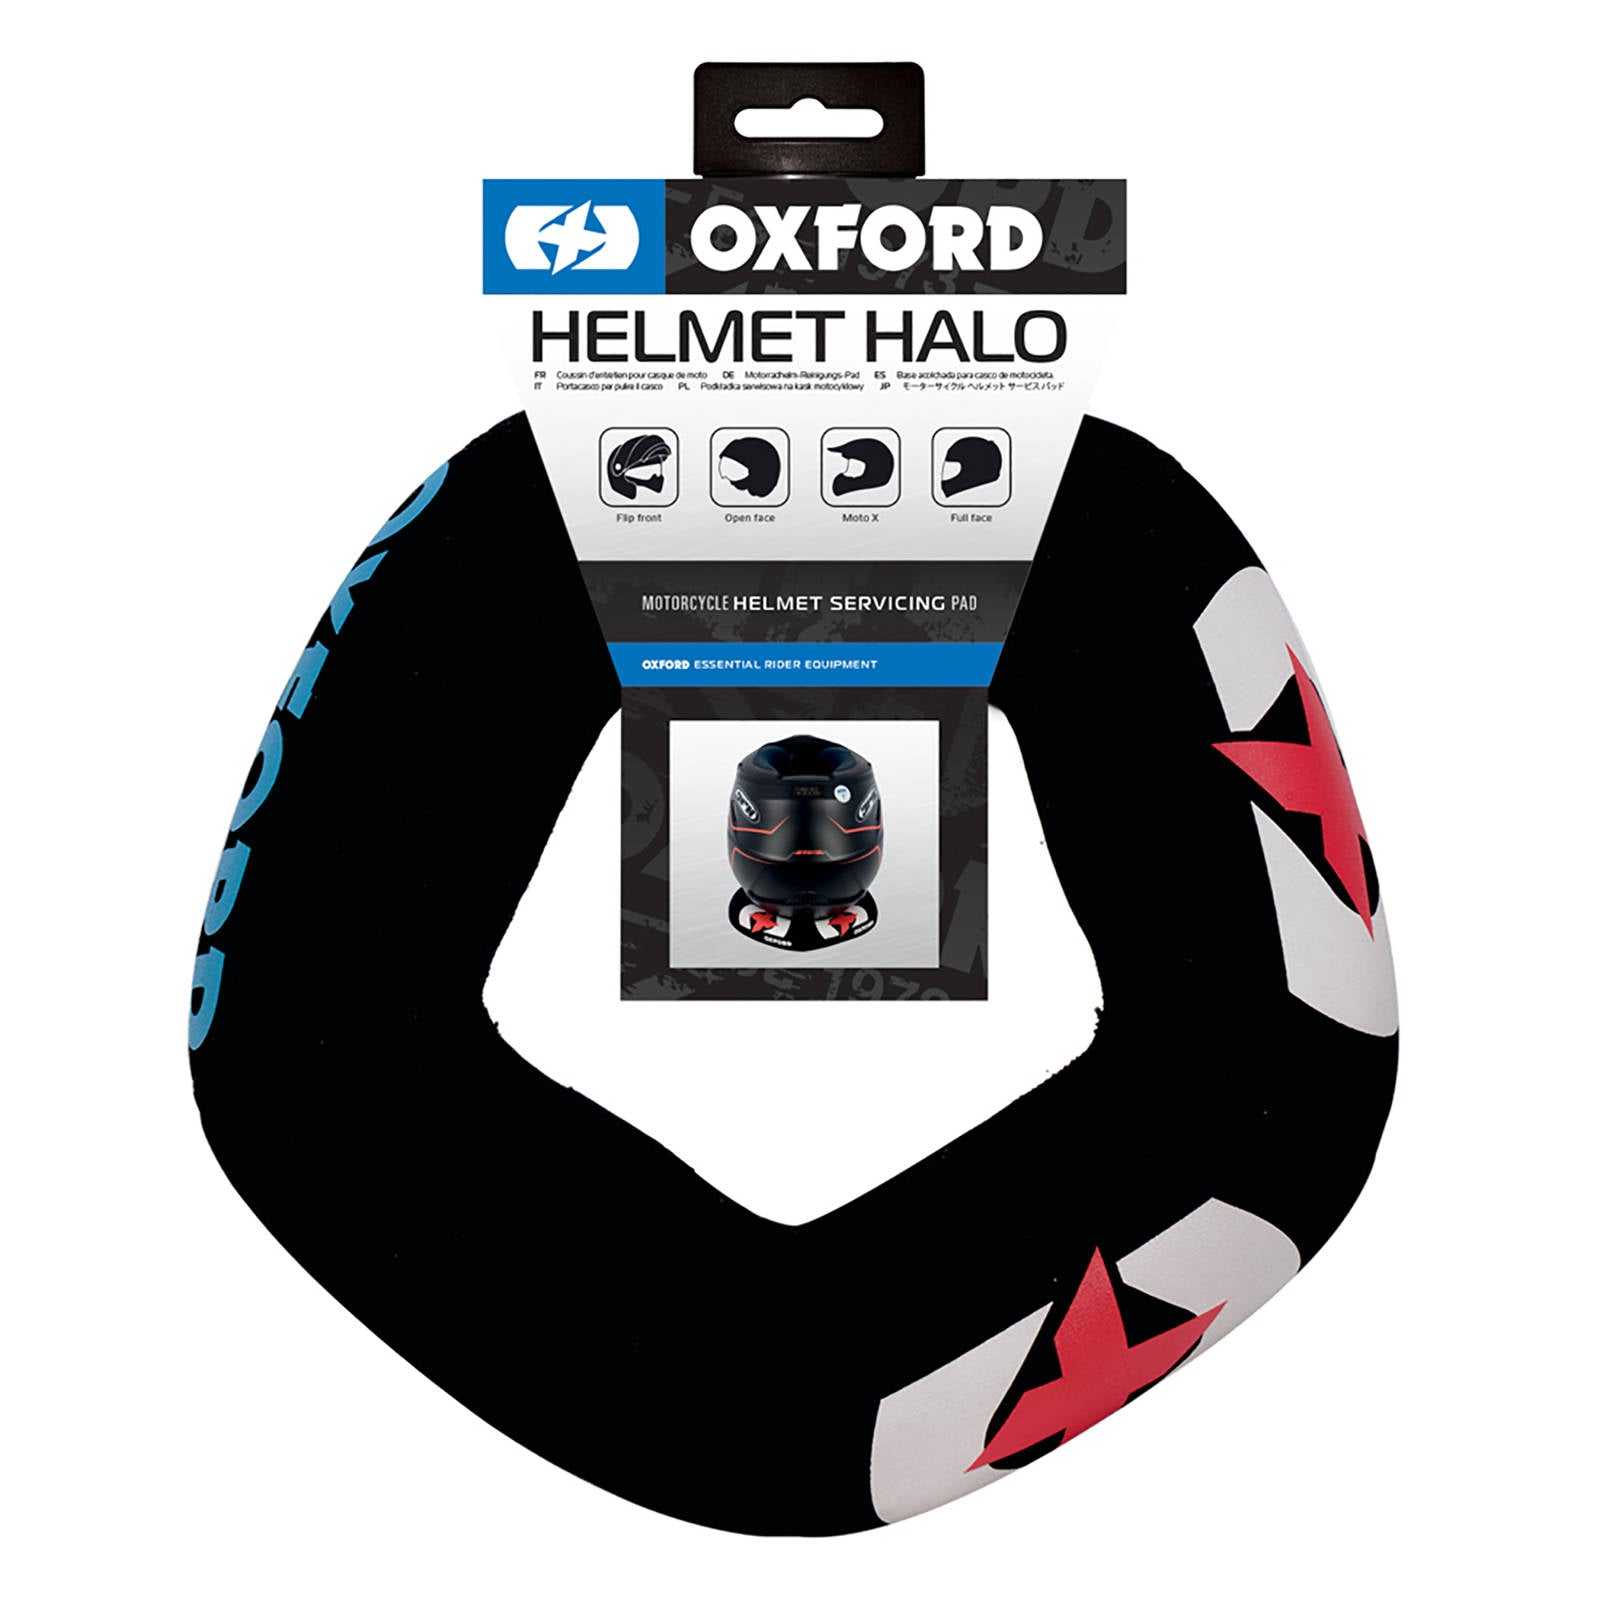 Oxford, OXFORD HELMET HALO - HELMET SERVICE PAD (replaces OXOF603 )